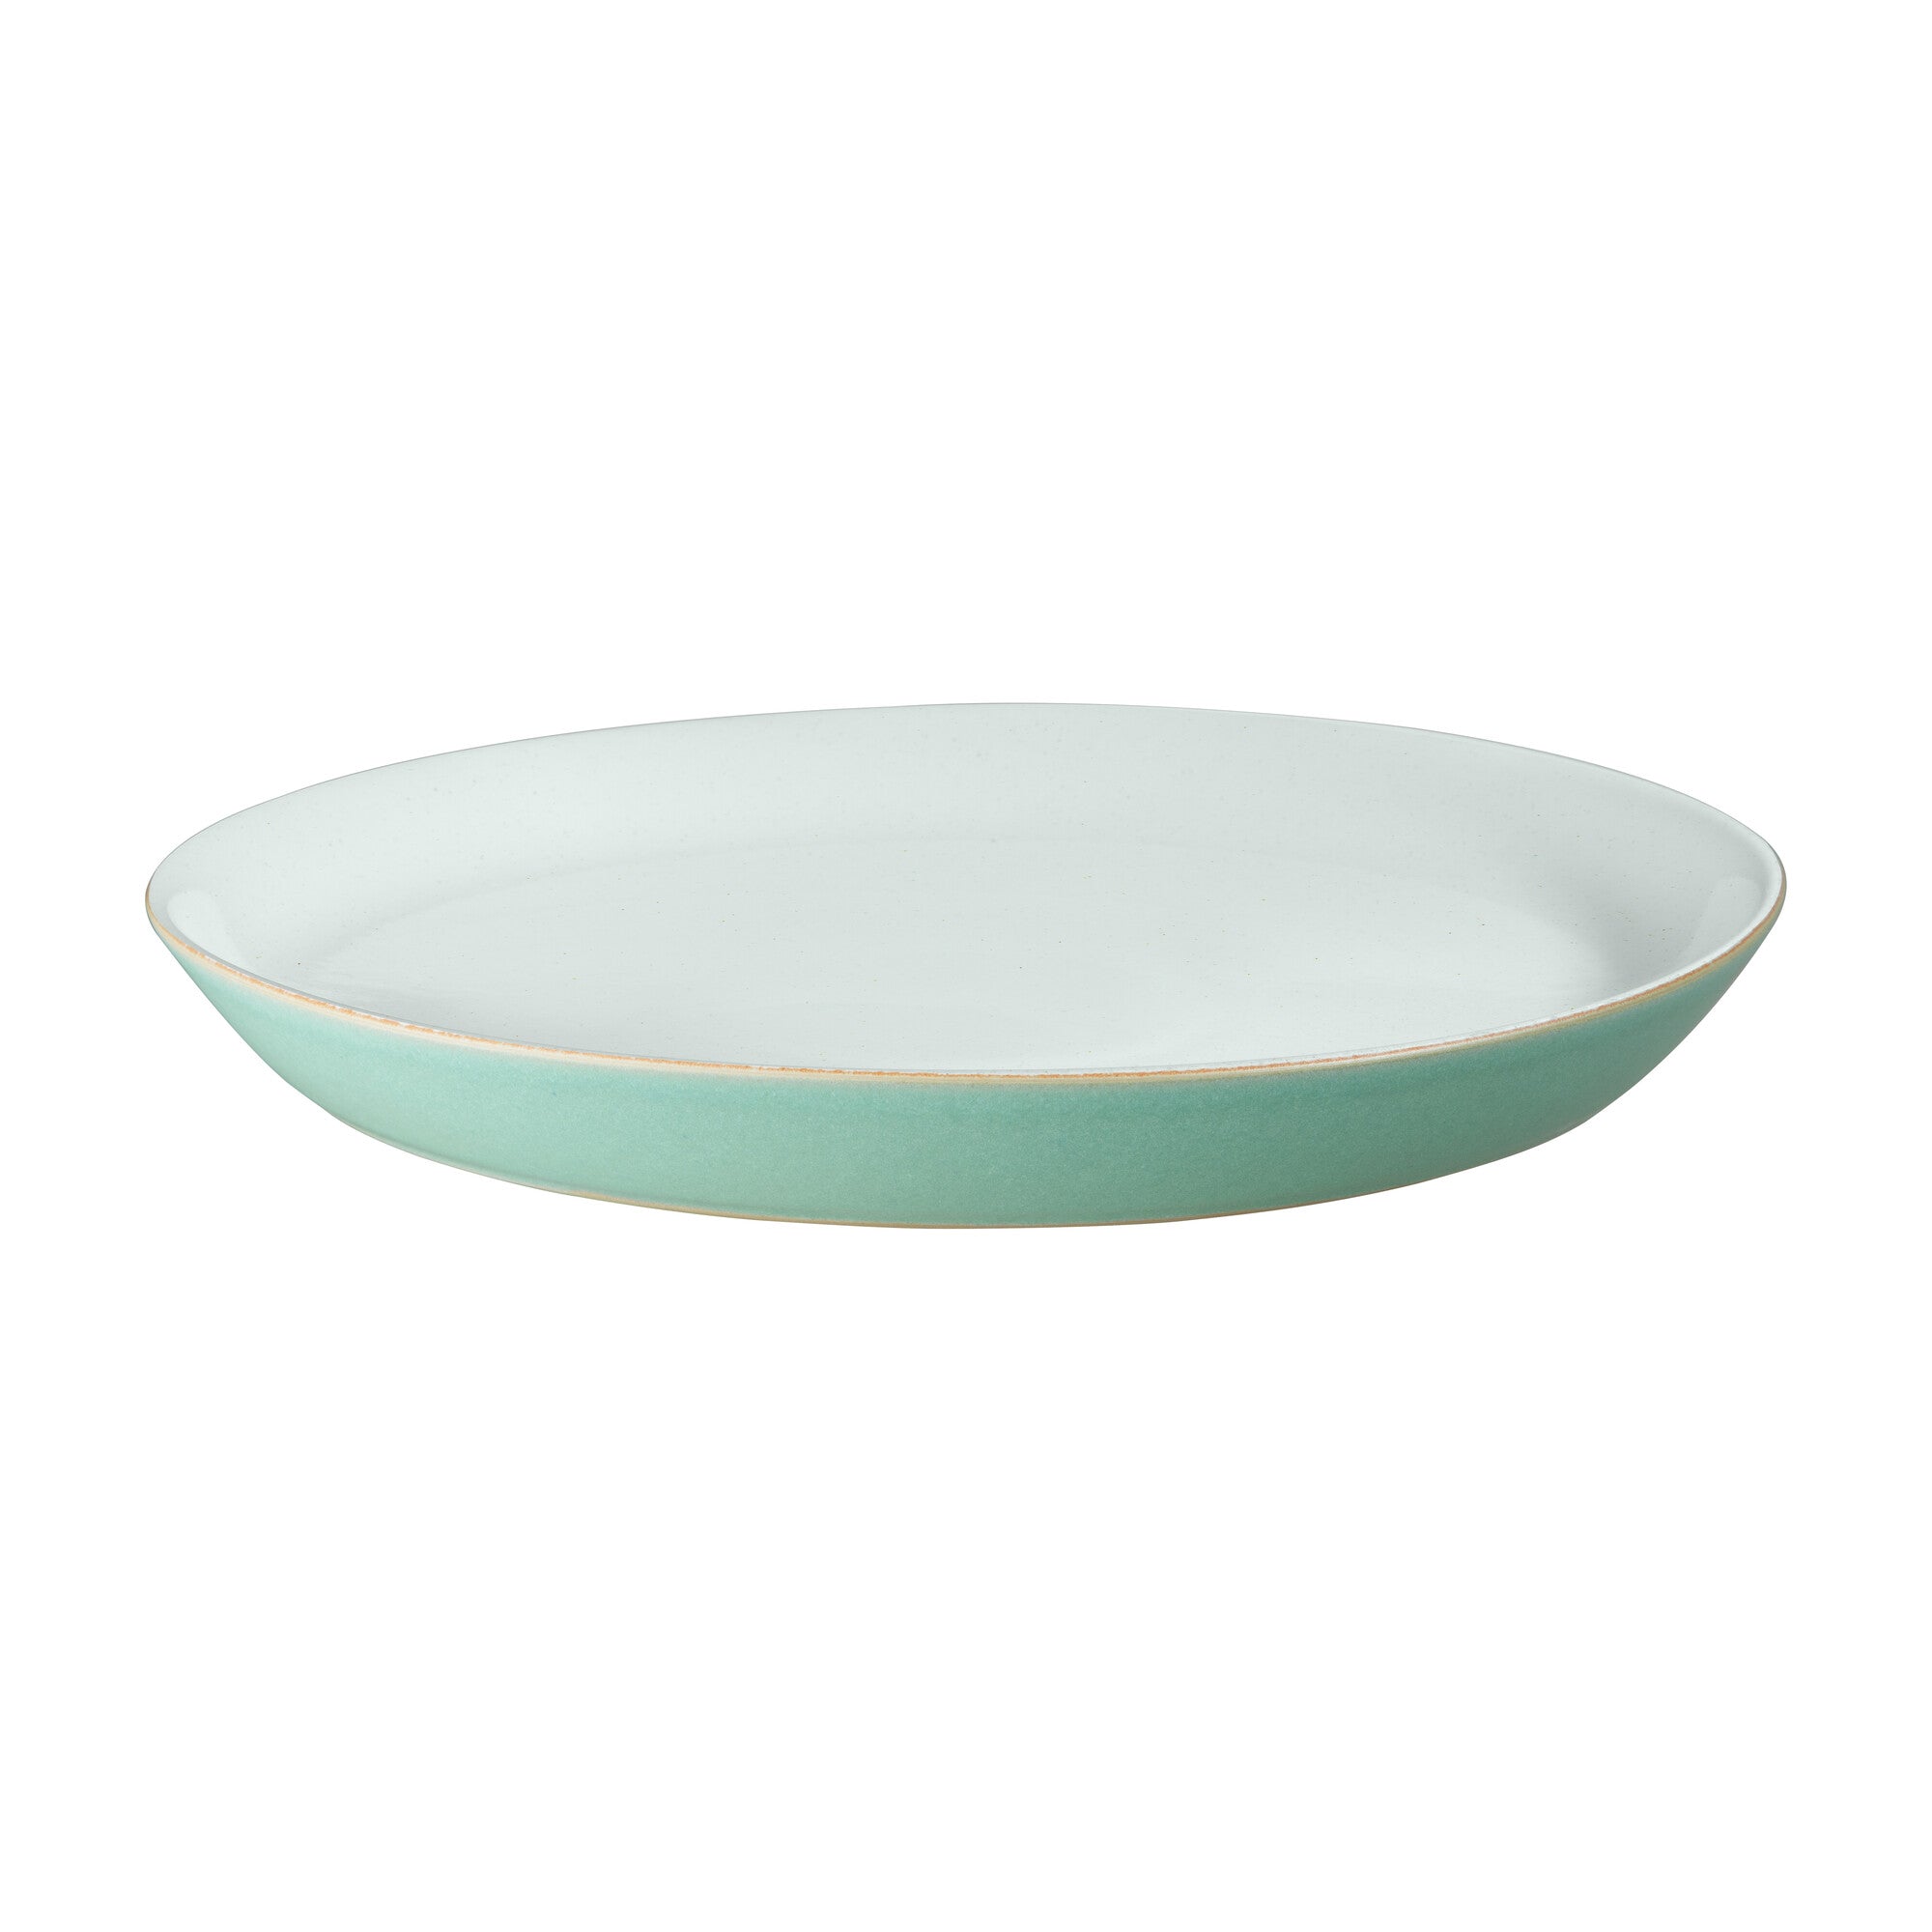 Denby Impression Mint Dinner Plate (Plain)